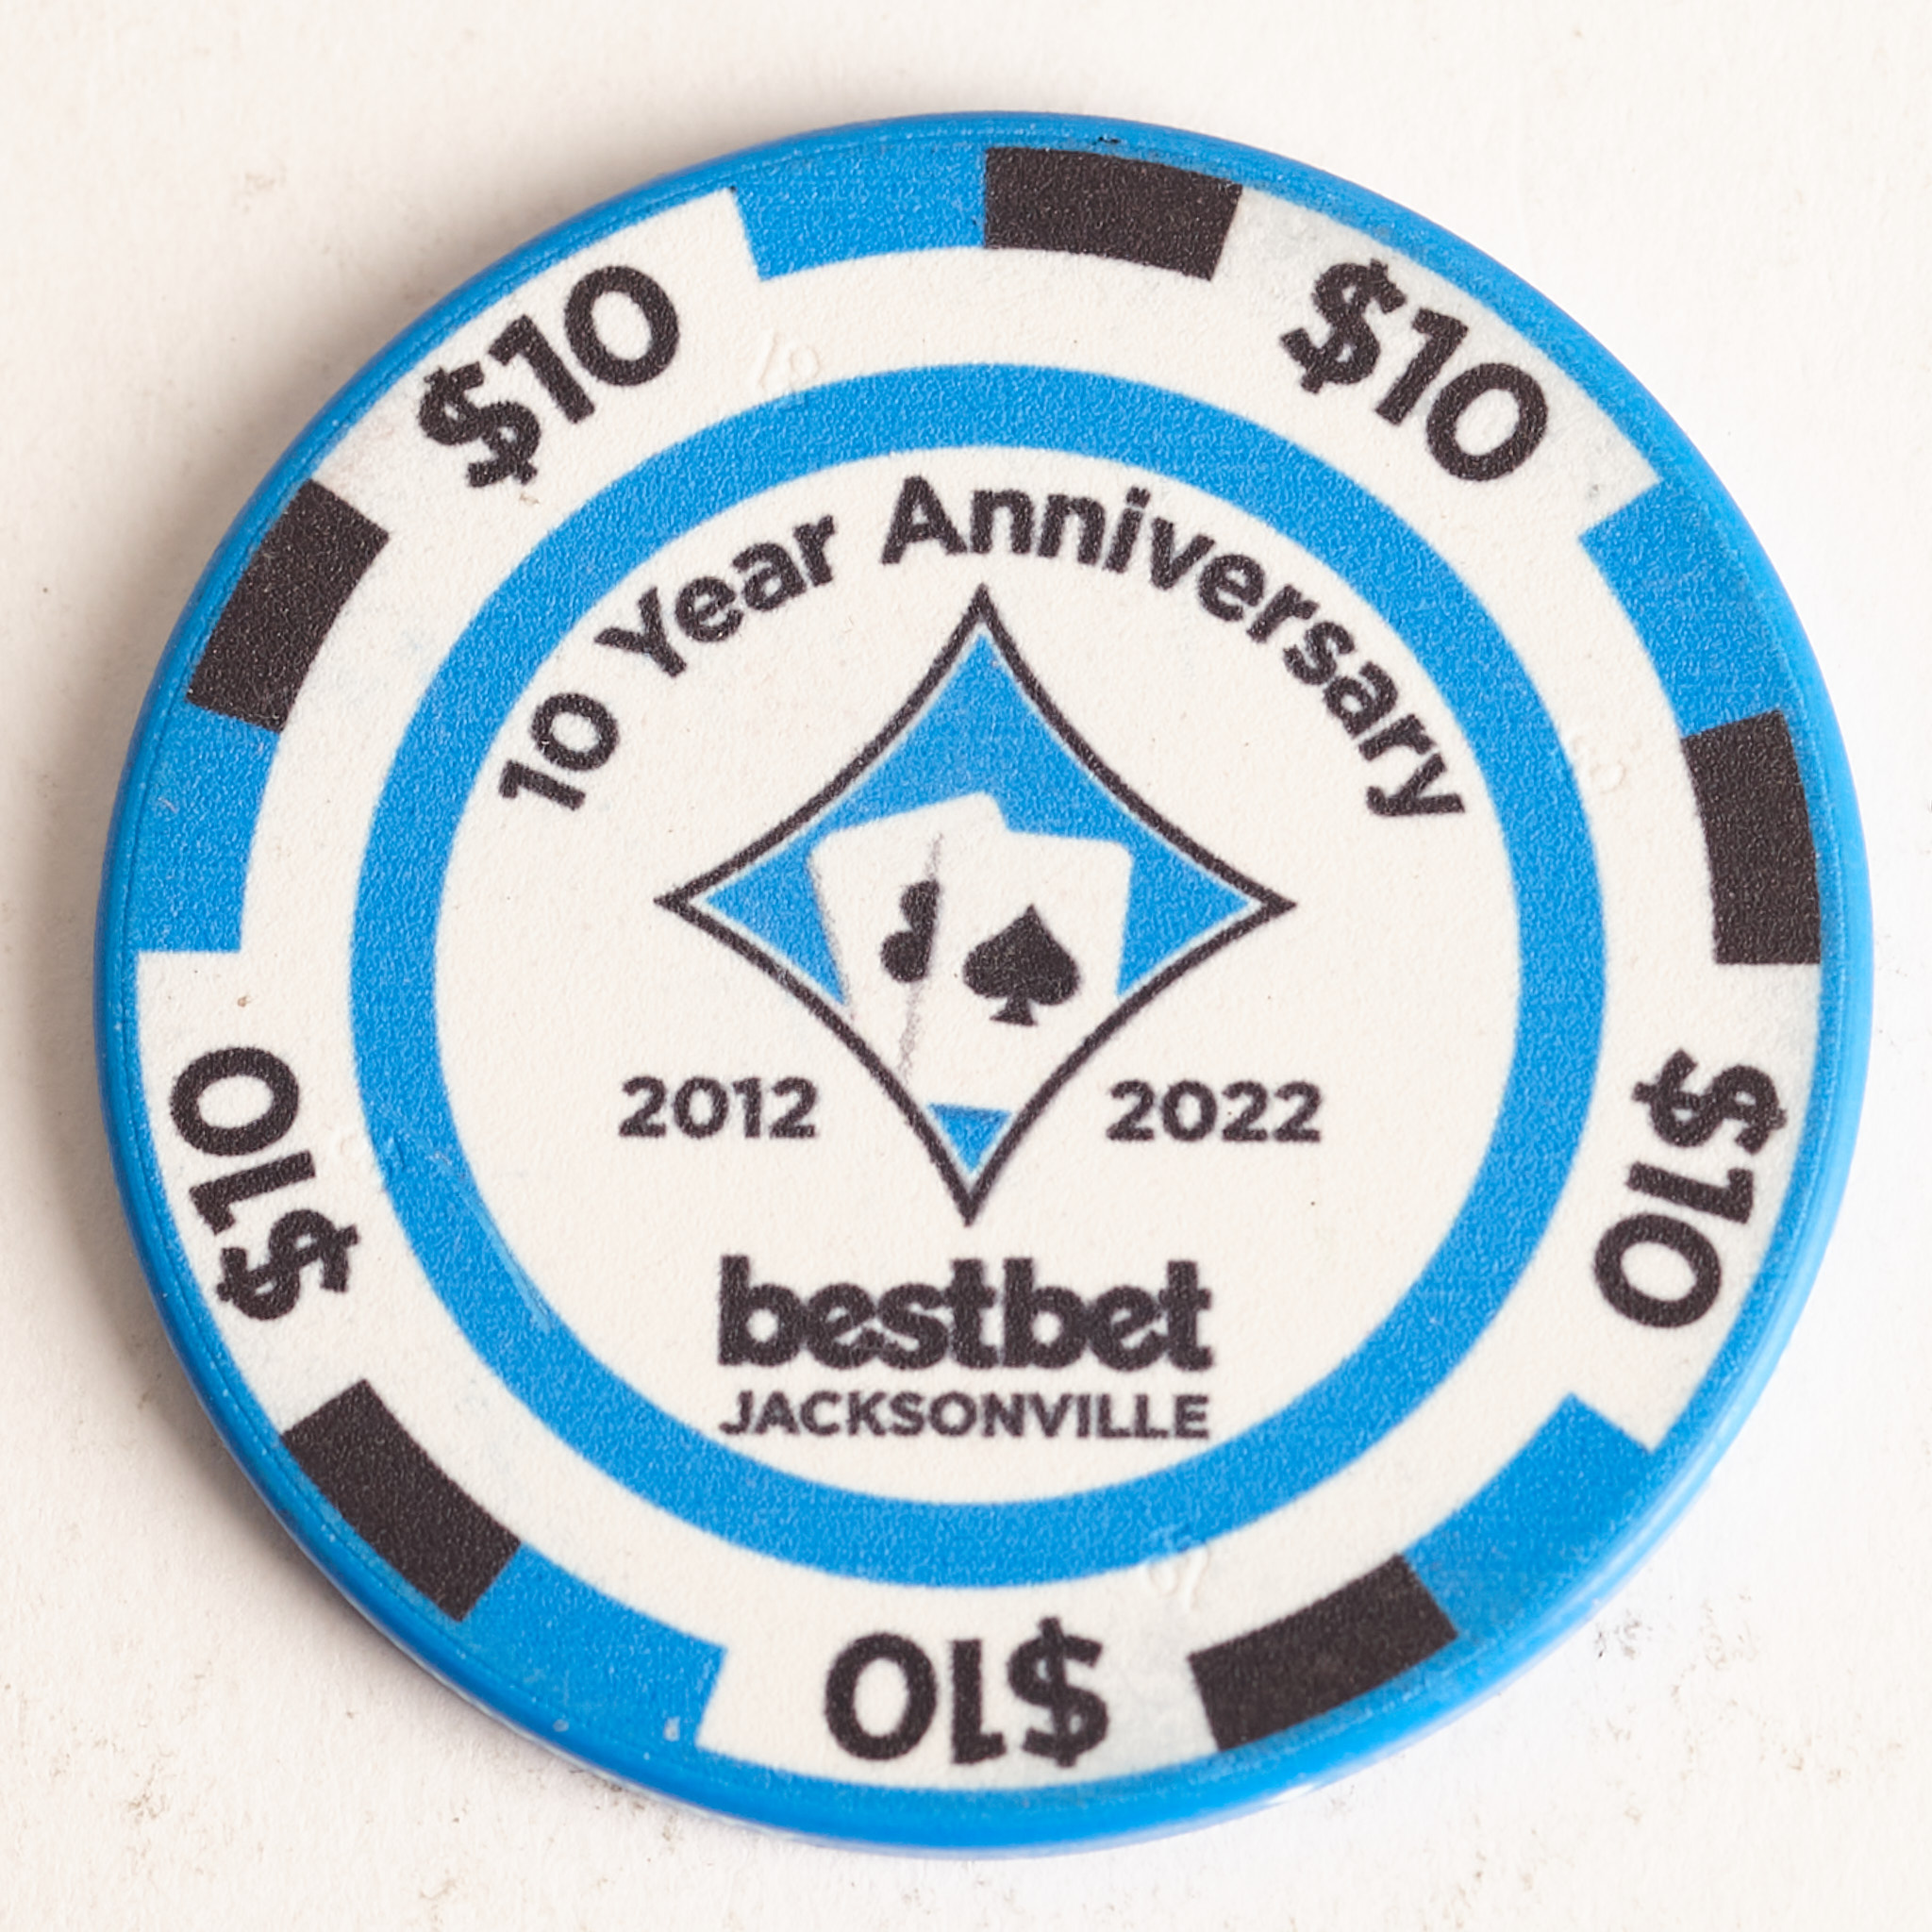 BESTBET JACKSONVILLE, 2012-2022 10 YEAR ANNIVERSARY, Poker Card Guard Chip